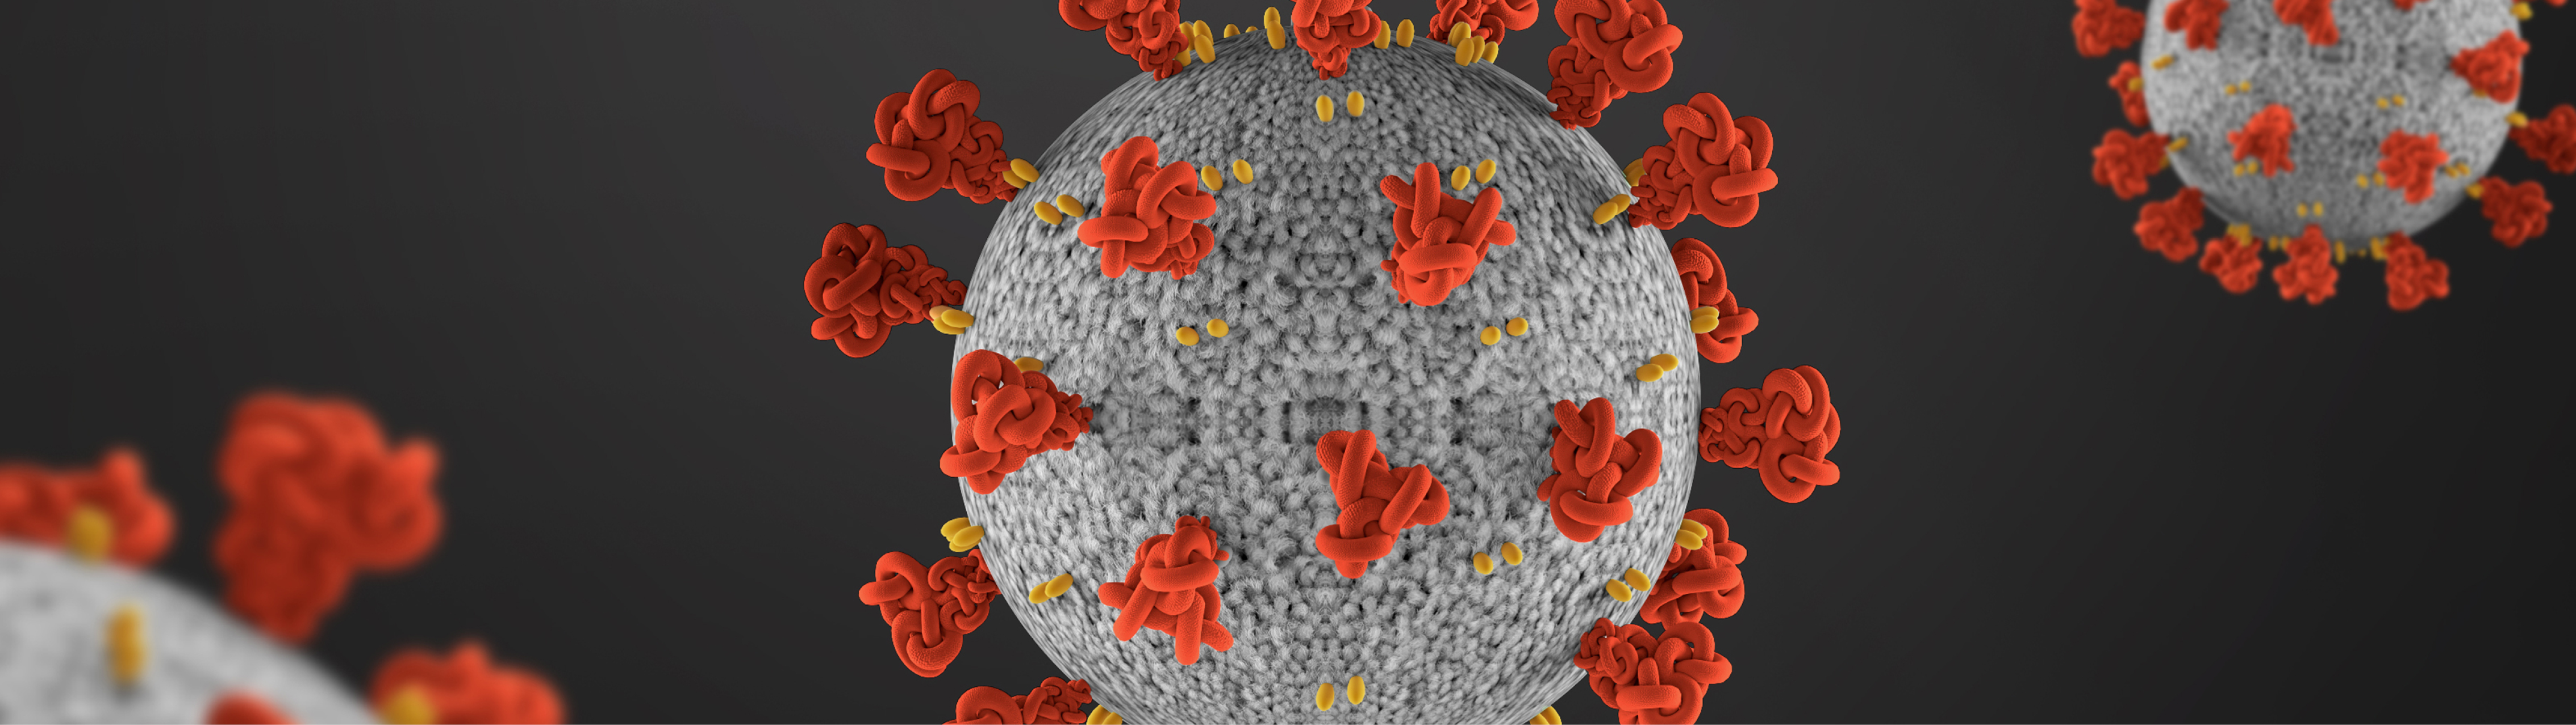 COVID-19 image of up close virus